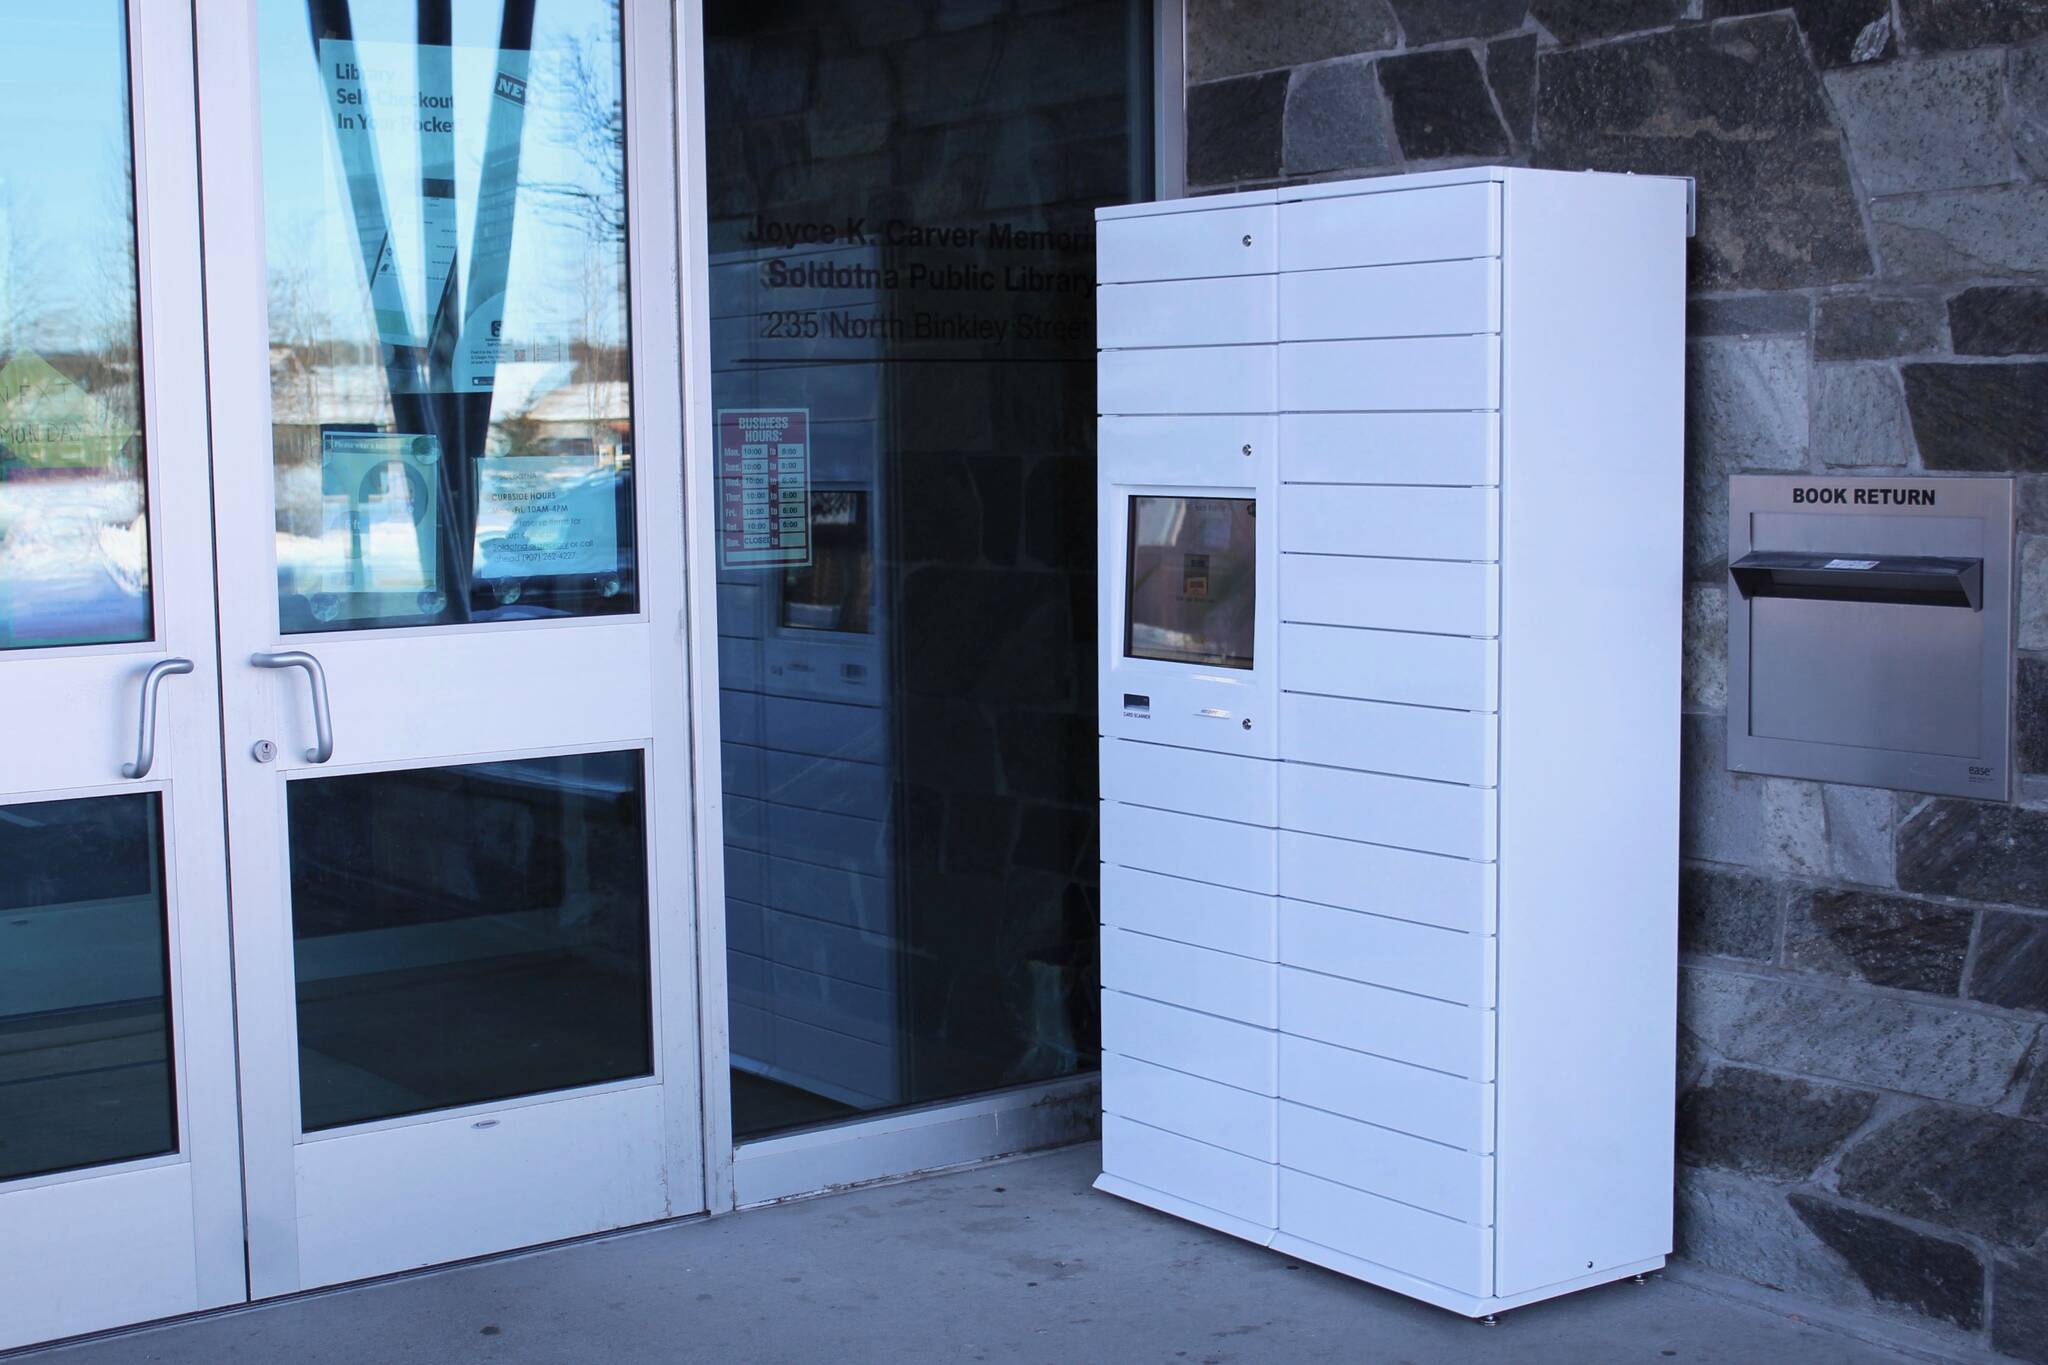 A holds locker is seen at the Soldotna Public Library on Friday, Jan. 15 in Soldotna, Alaska. (Ashlyn O’Hara/Peninsula Clarion)